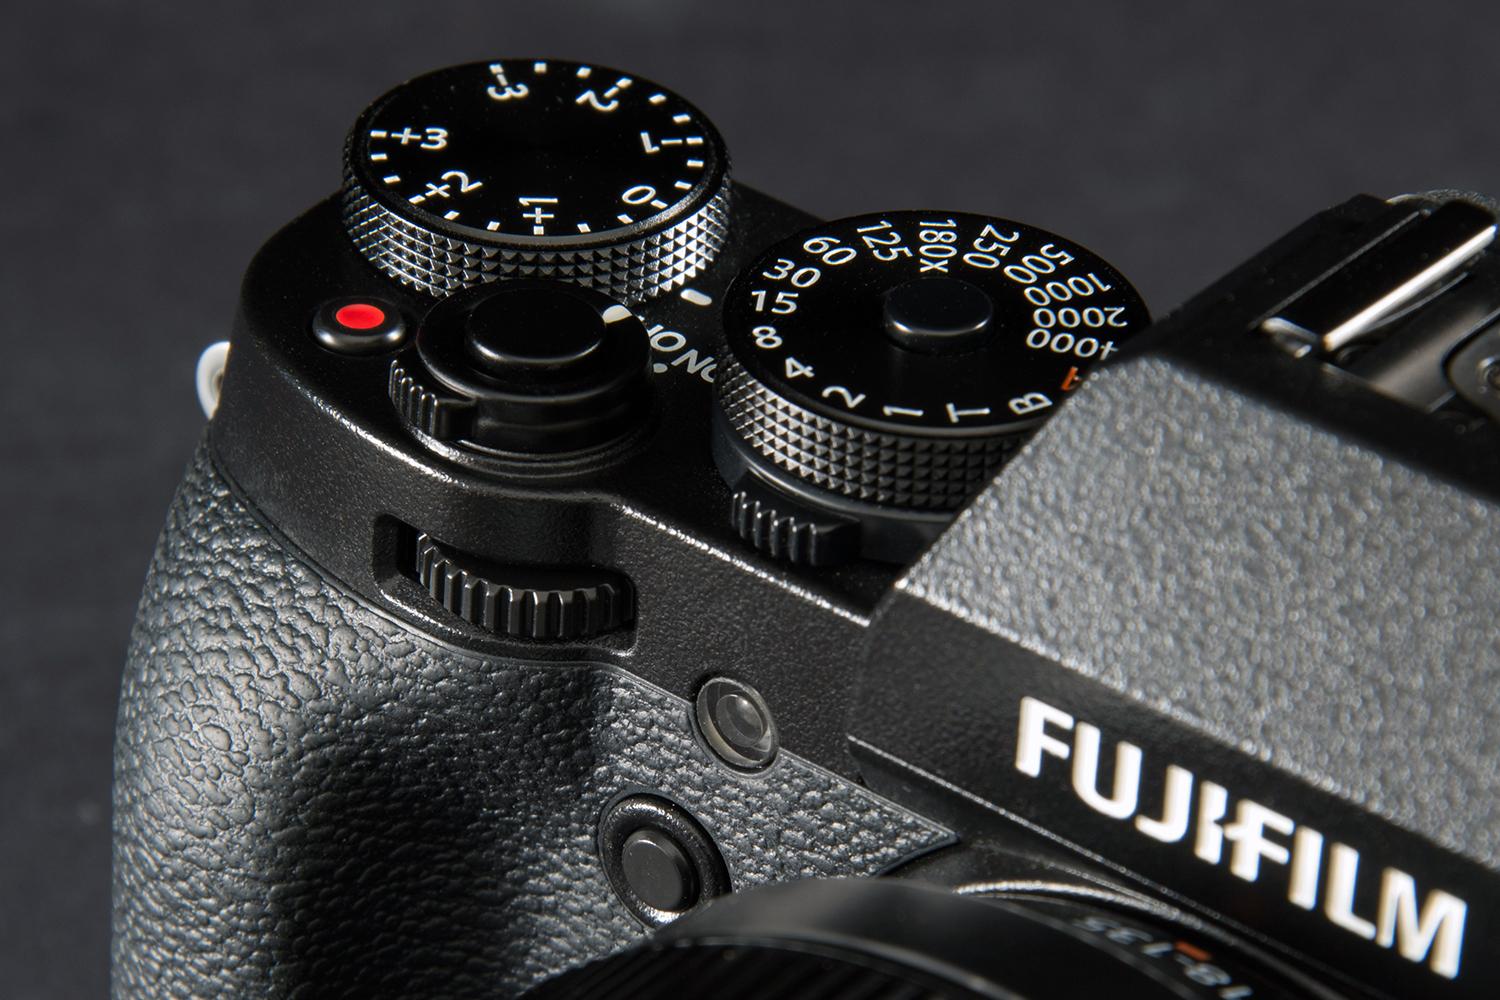 Fujifilm X-T1 camera review macro dials